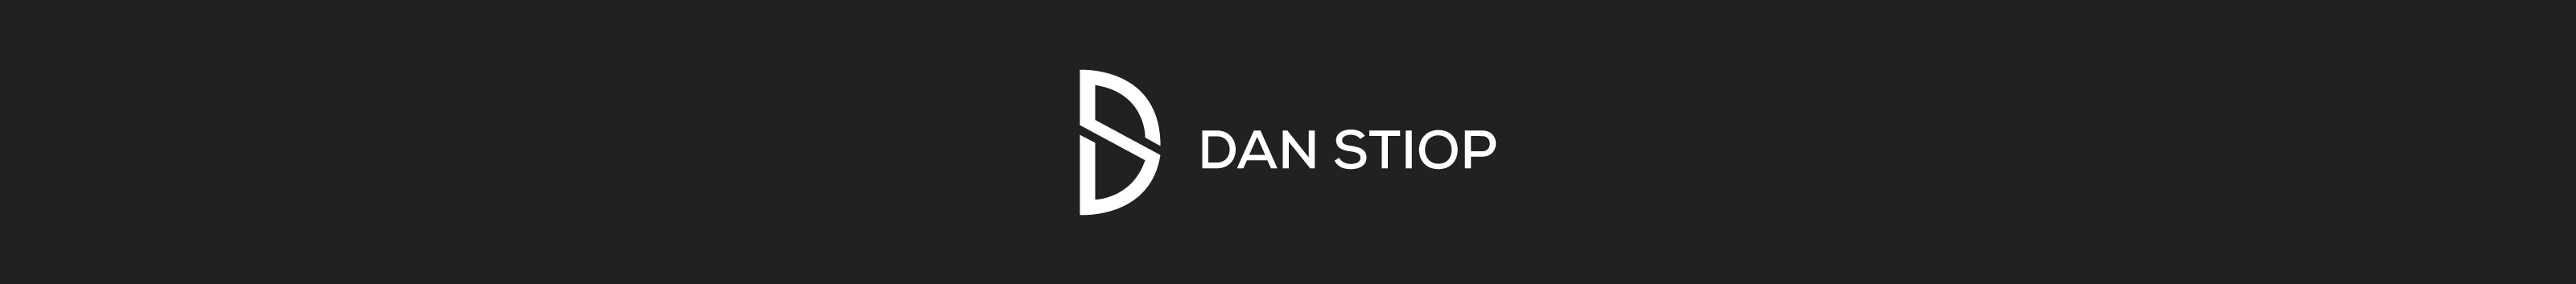 Dan Stiop's profile banner